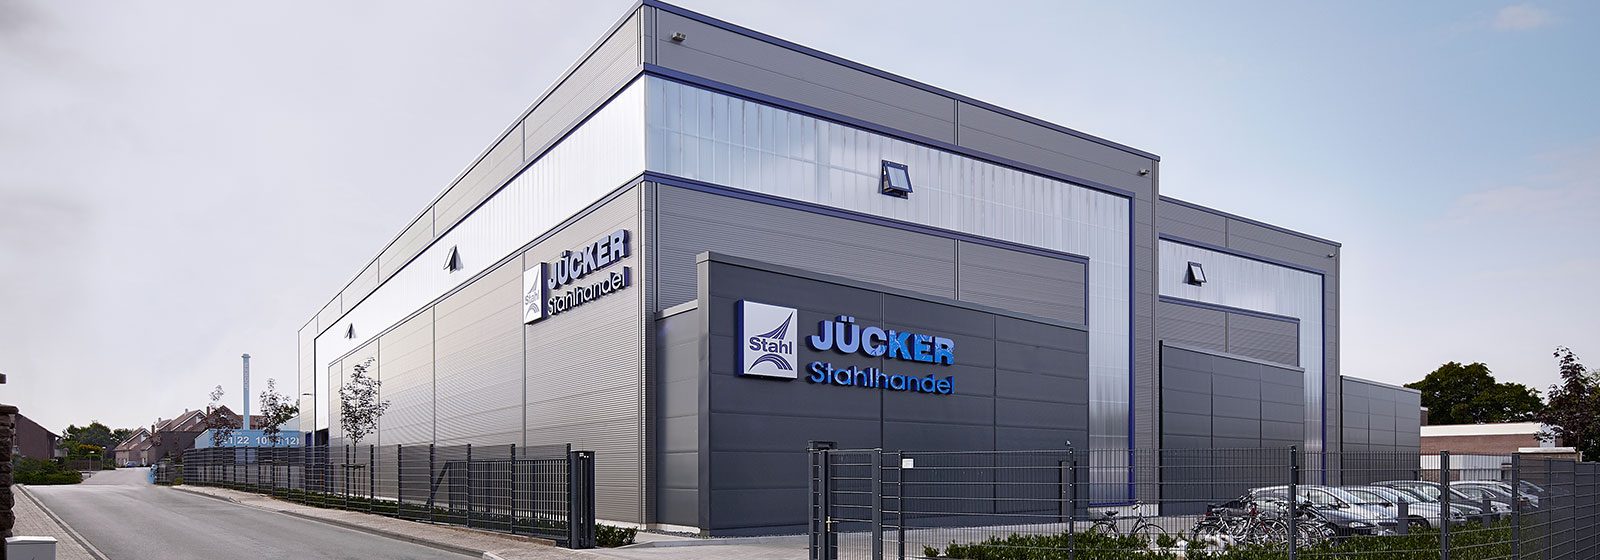 JÜCKER GmbH & Co. Stahlhandels KG